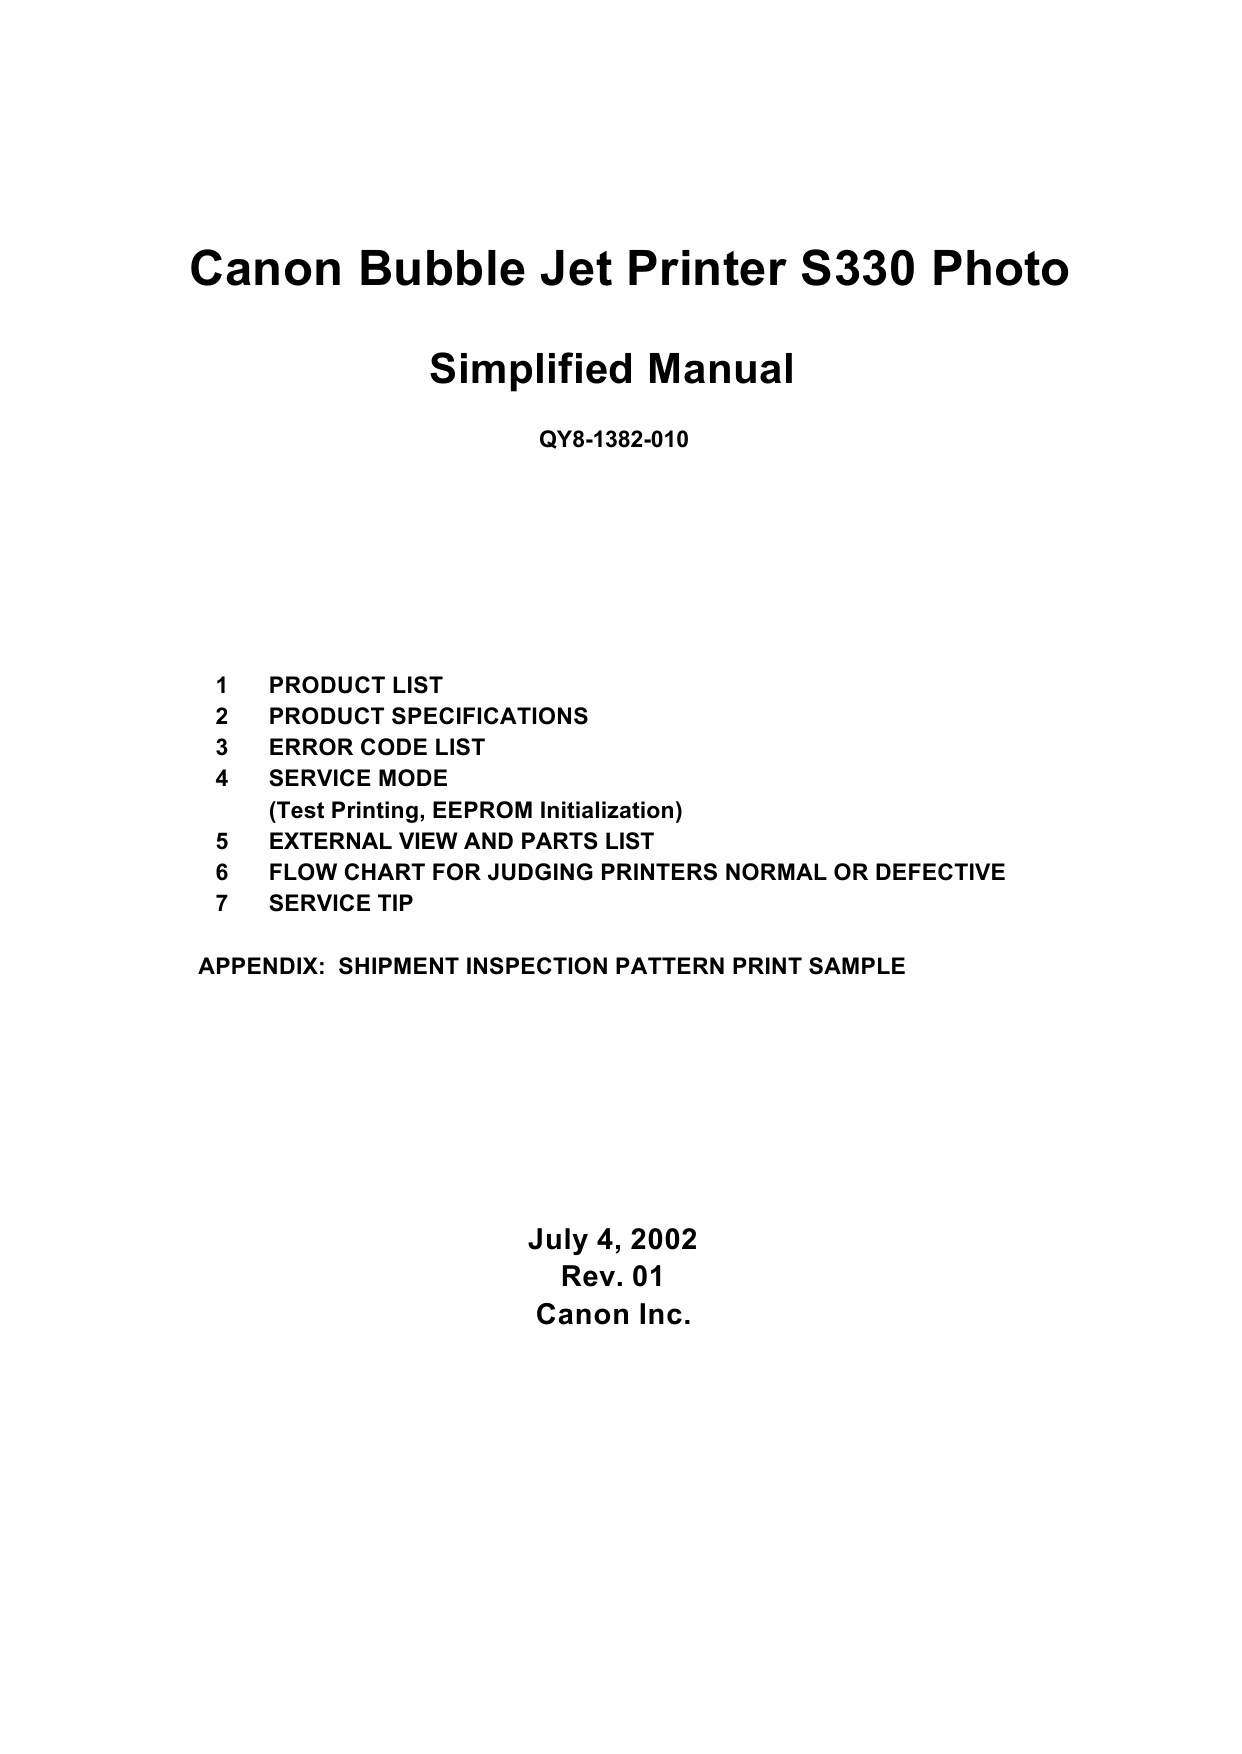 Canon PIXUS S330 Simplified Service Manual-1